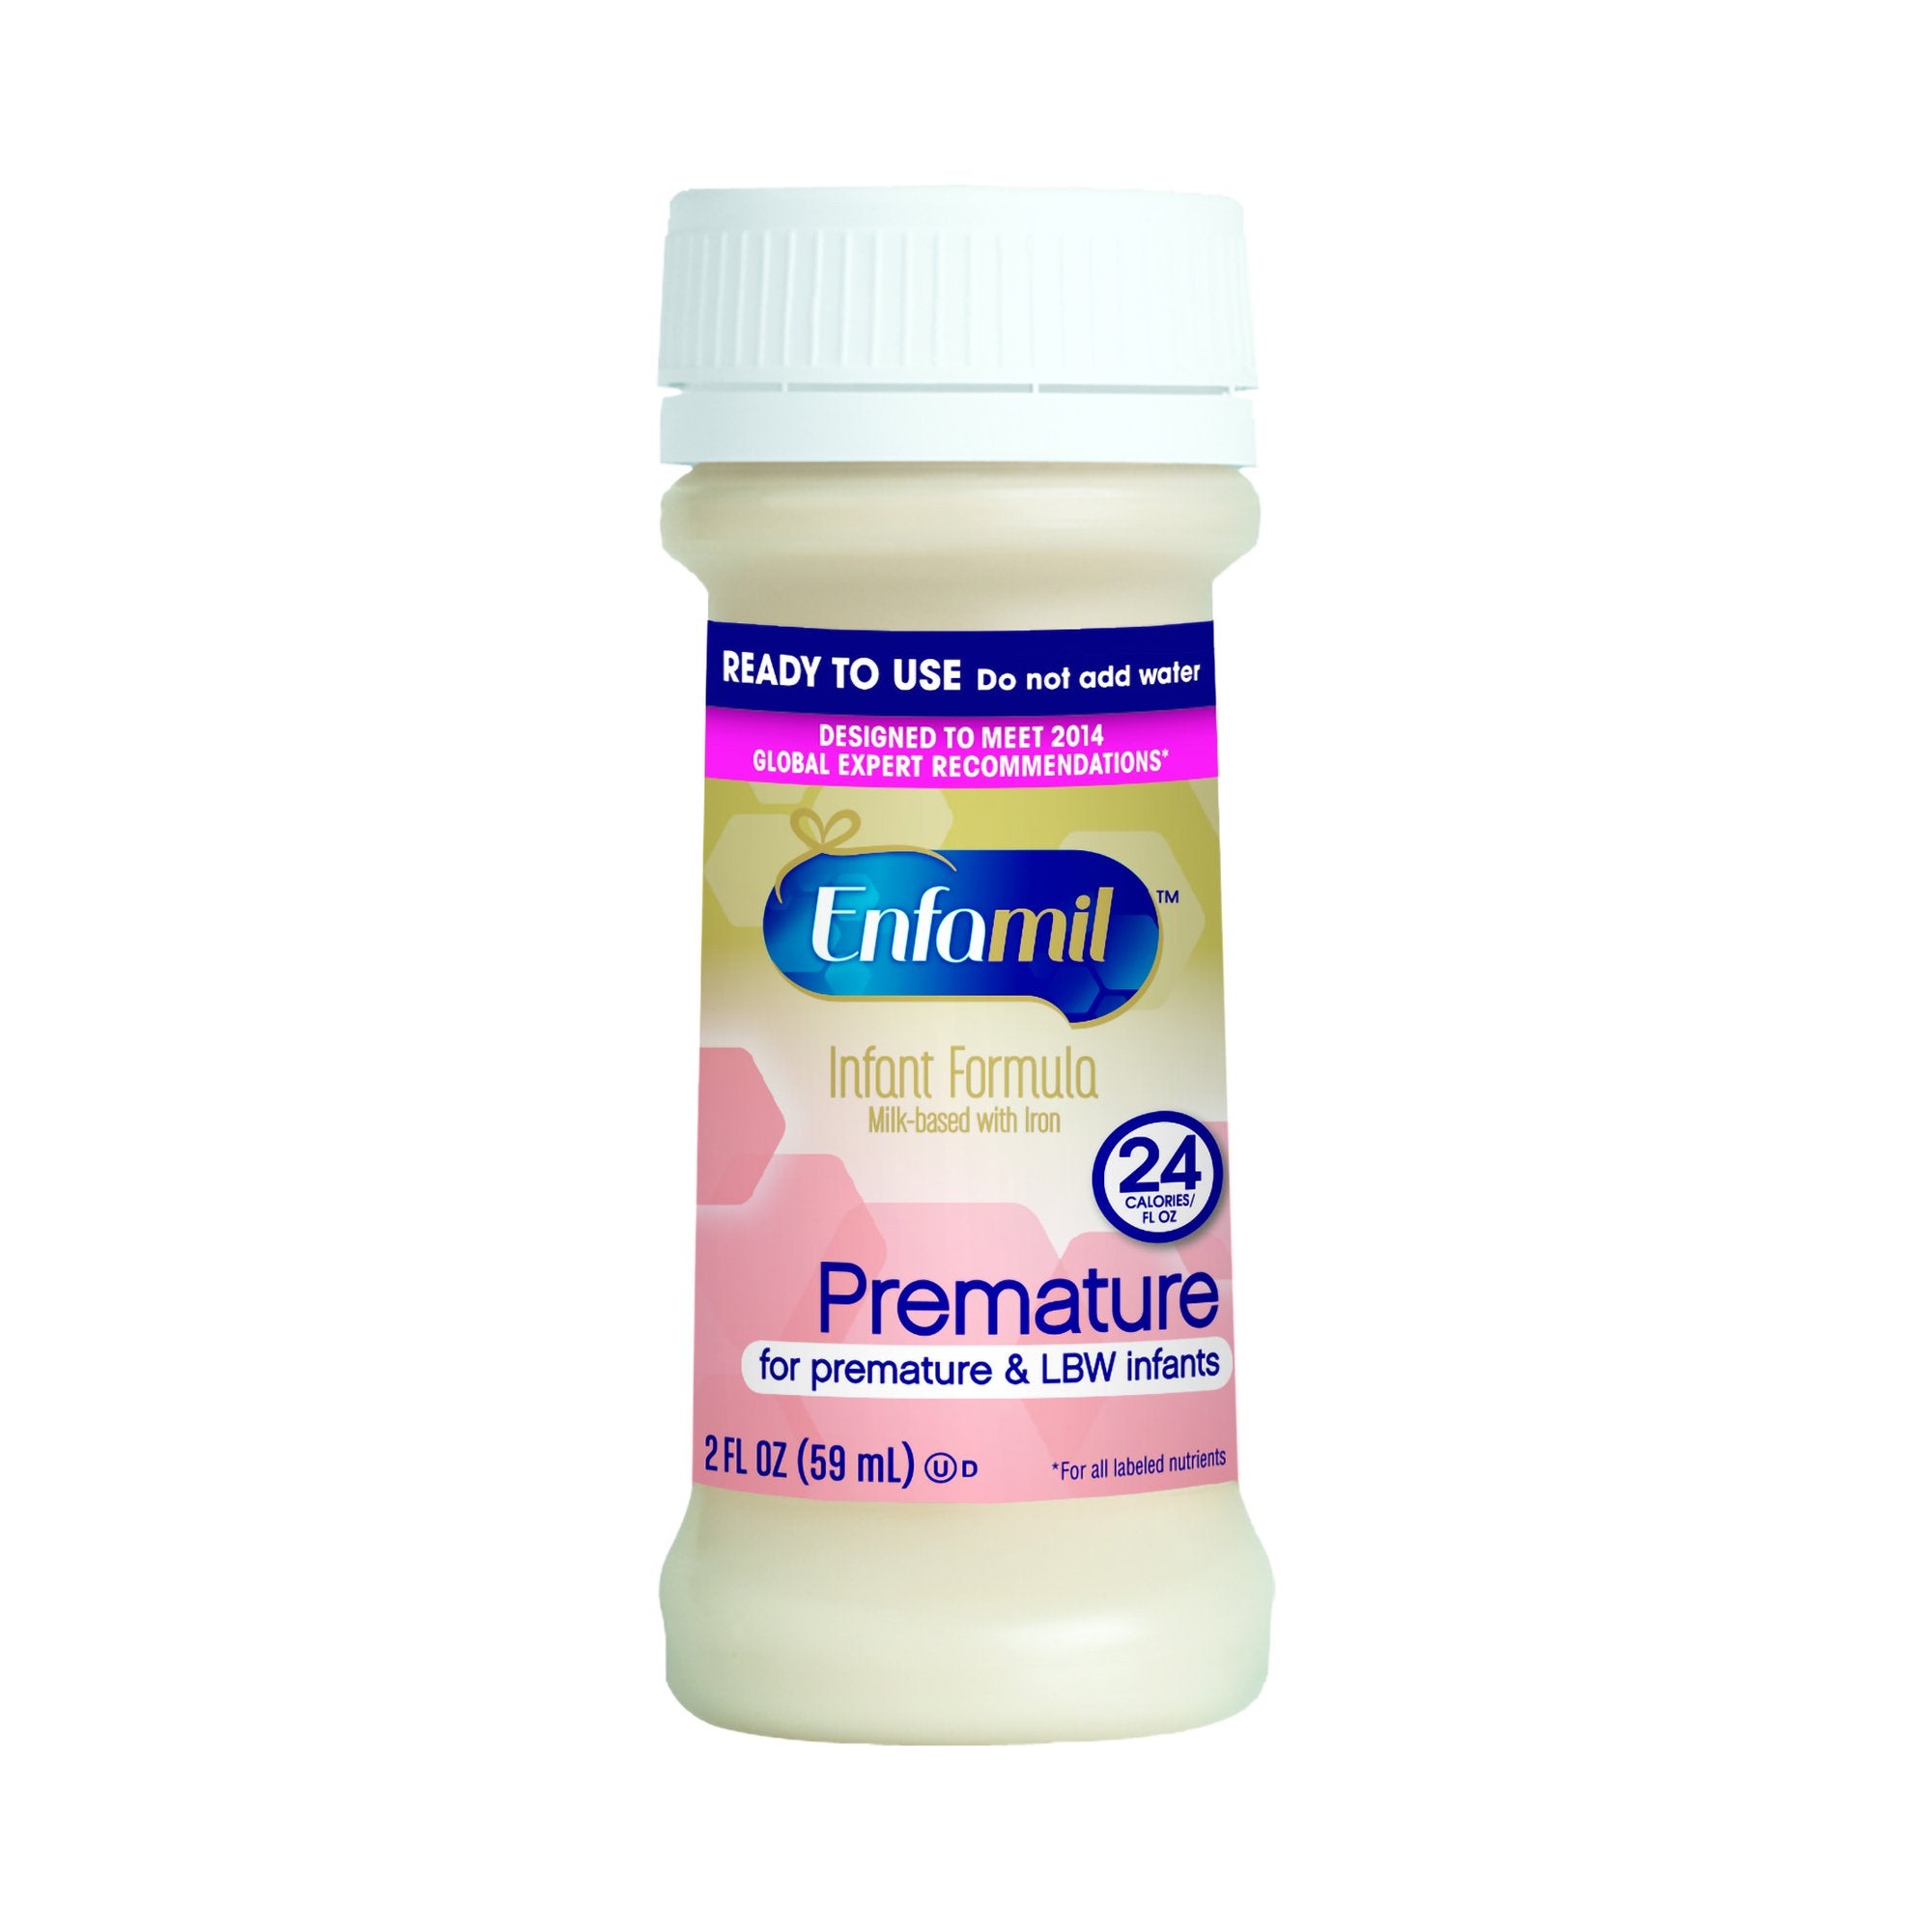 Infant Formula Enfamil Premature 24 Cal 2 oz. Nursette Bottle Liquid Milk-Based Premature